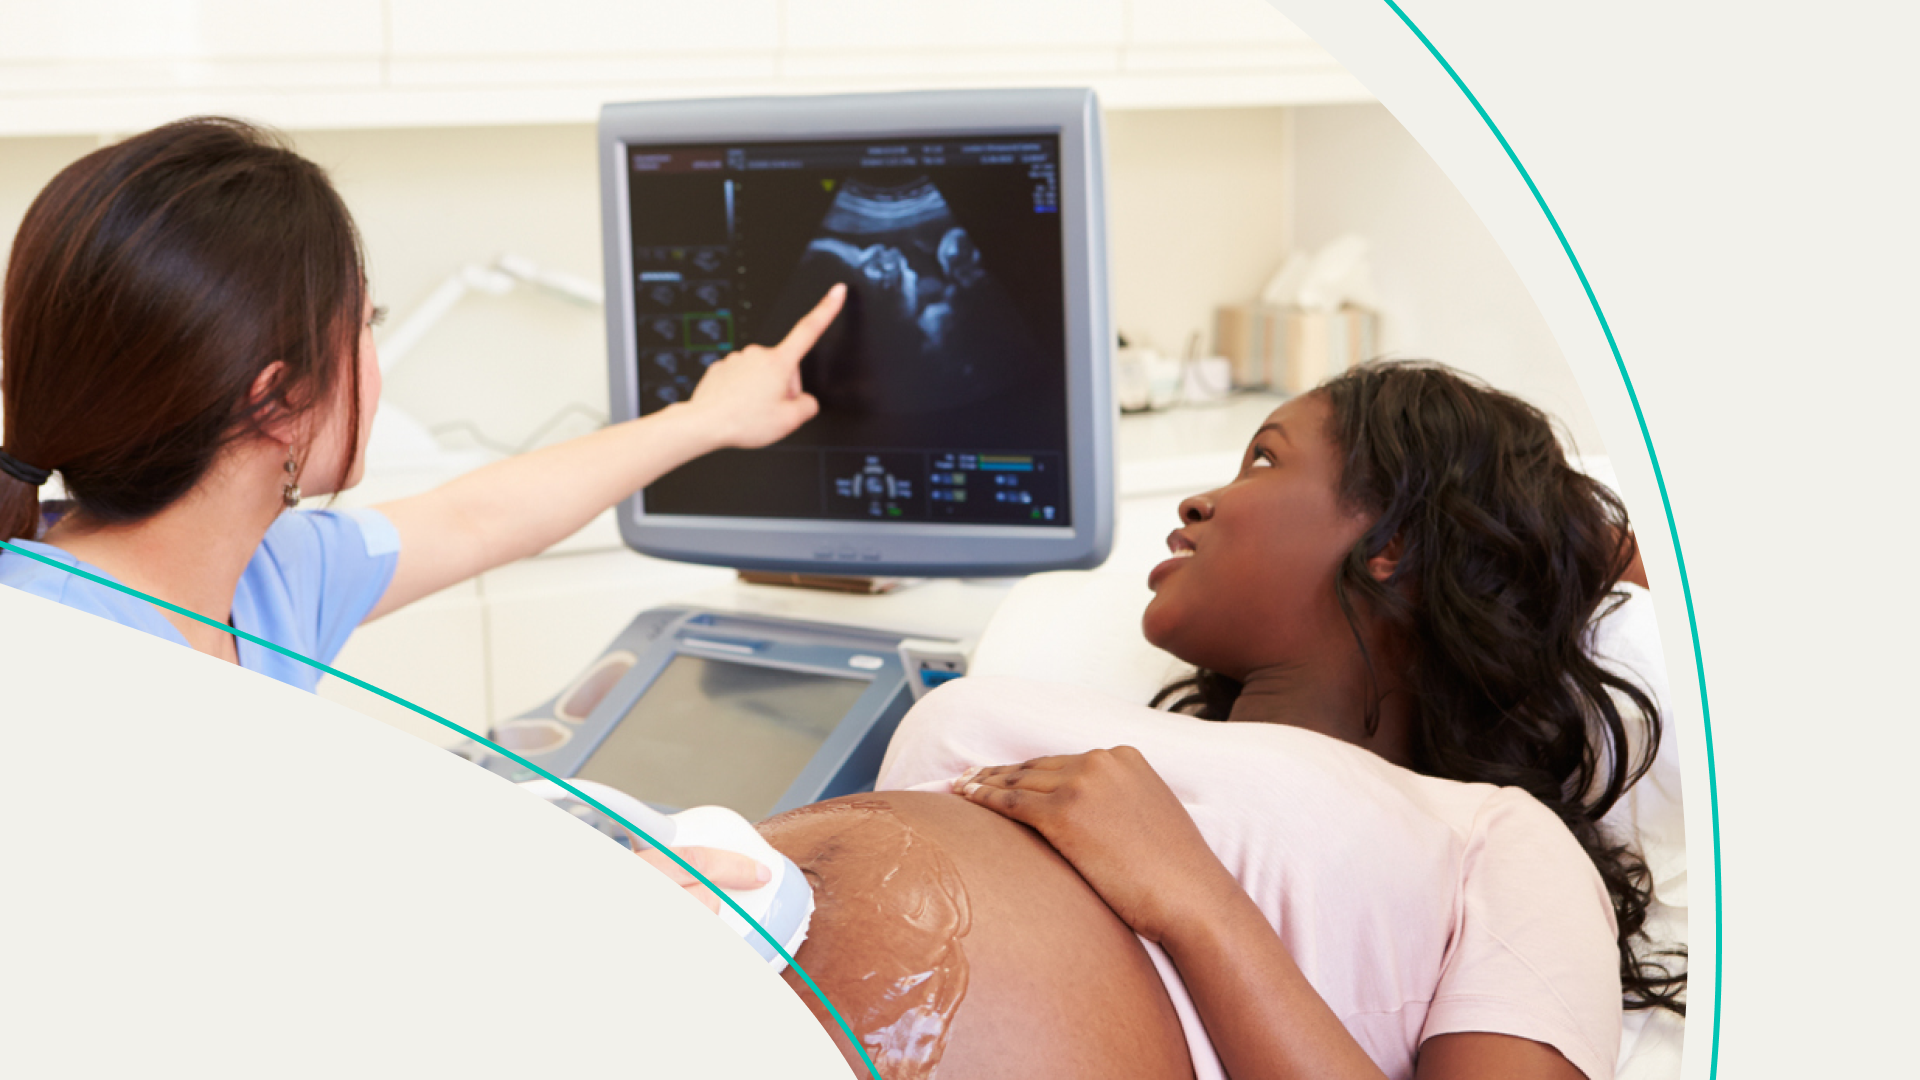 Pregnant woman having an ultrasound